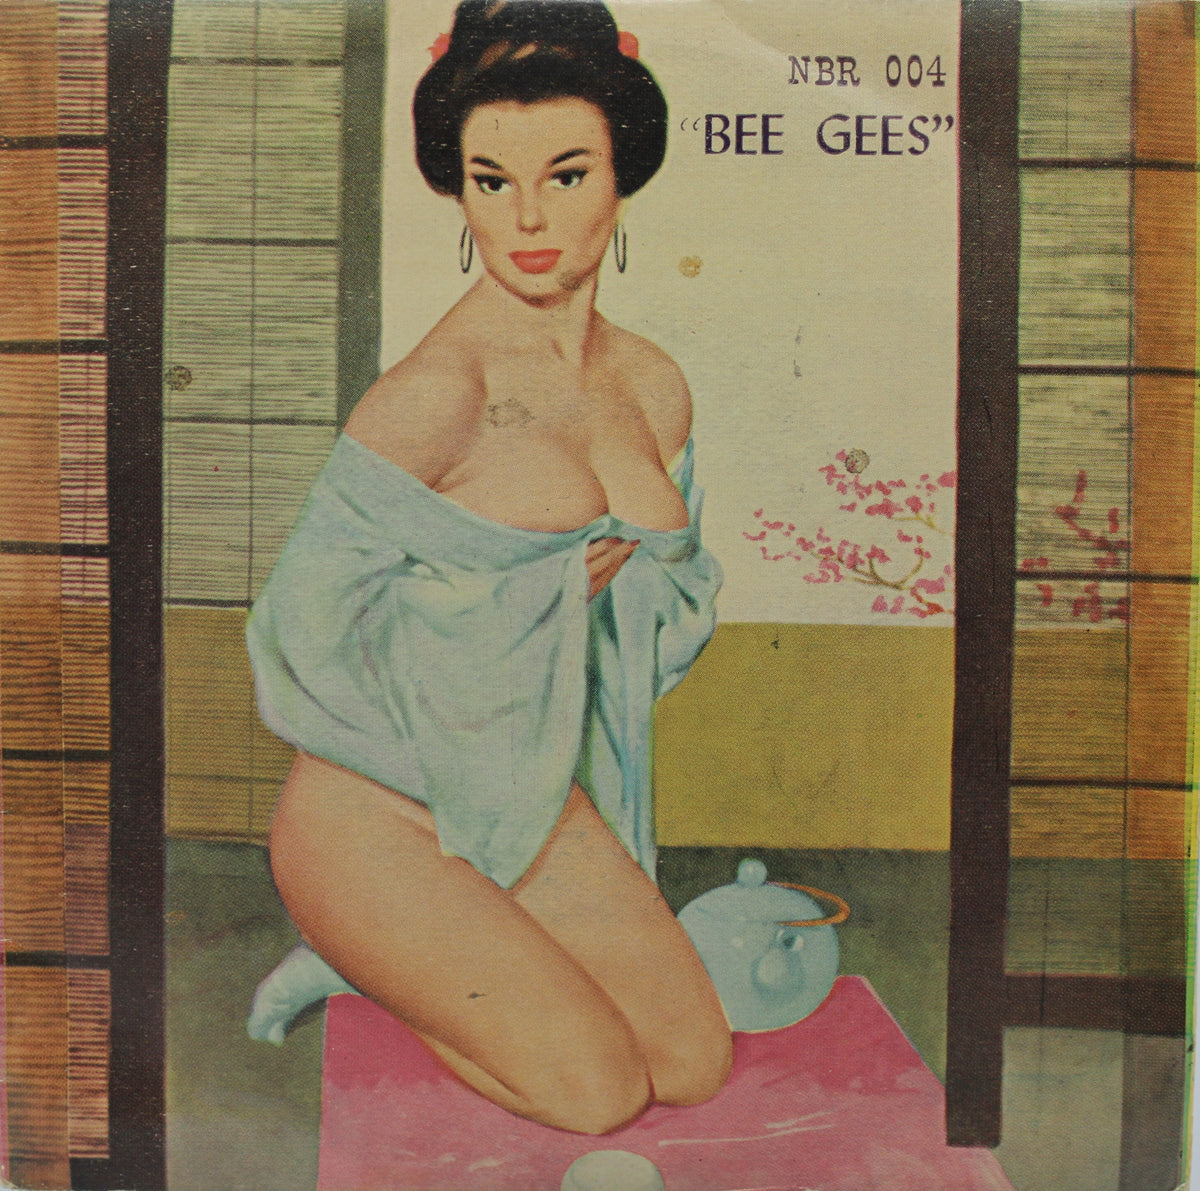 Bee Gees - Massachusetts, Vinyl EP 45rpm, Thailand